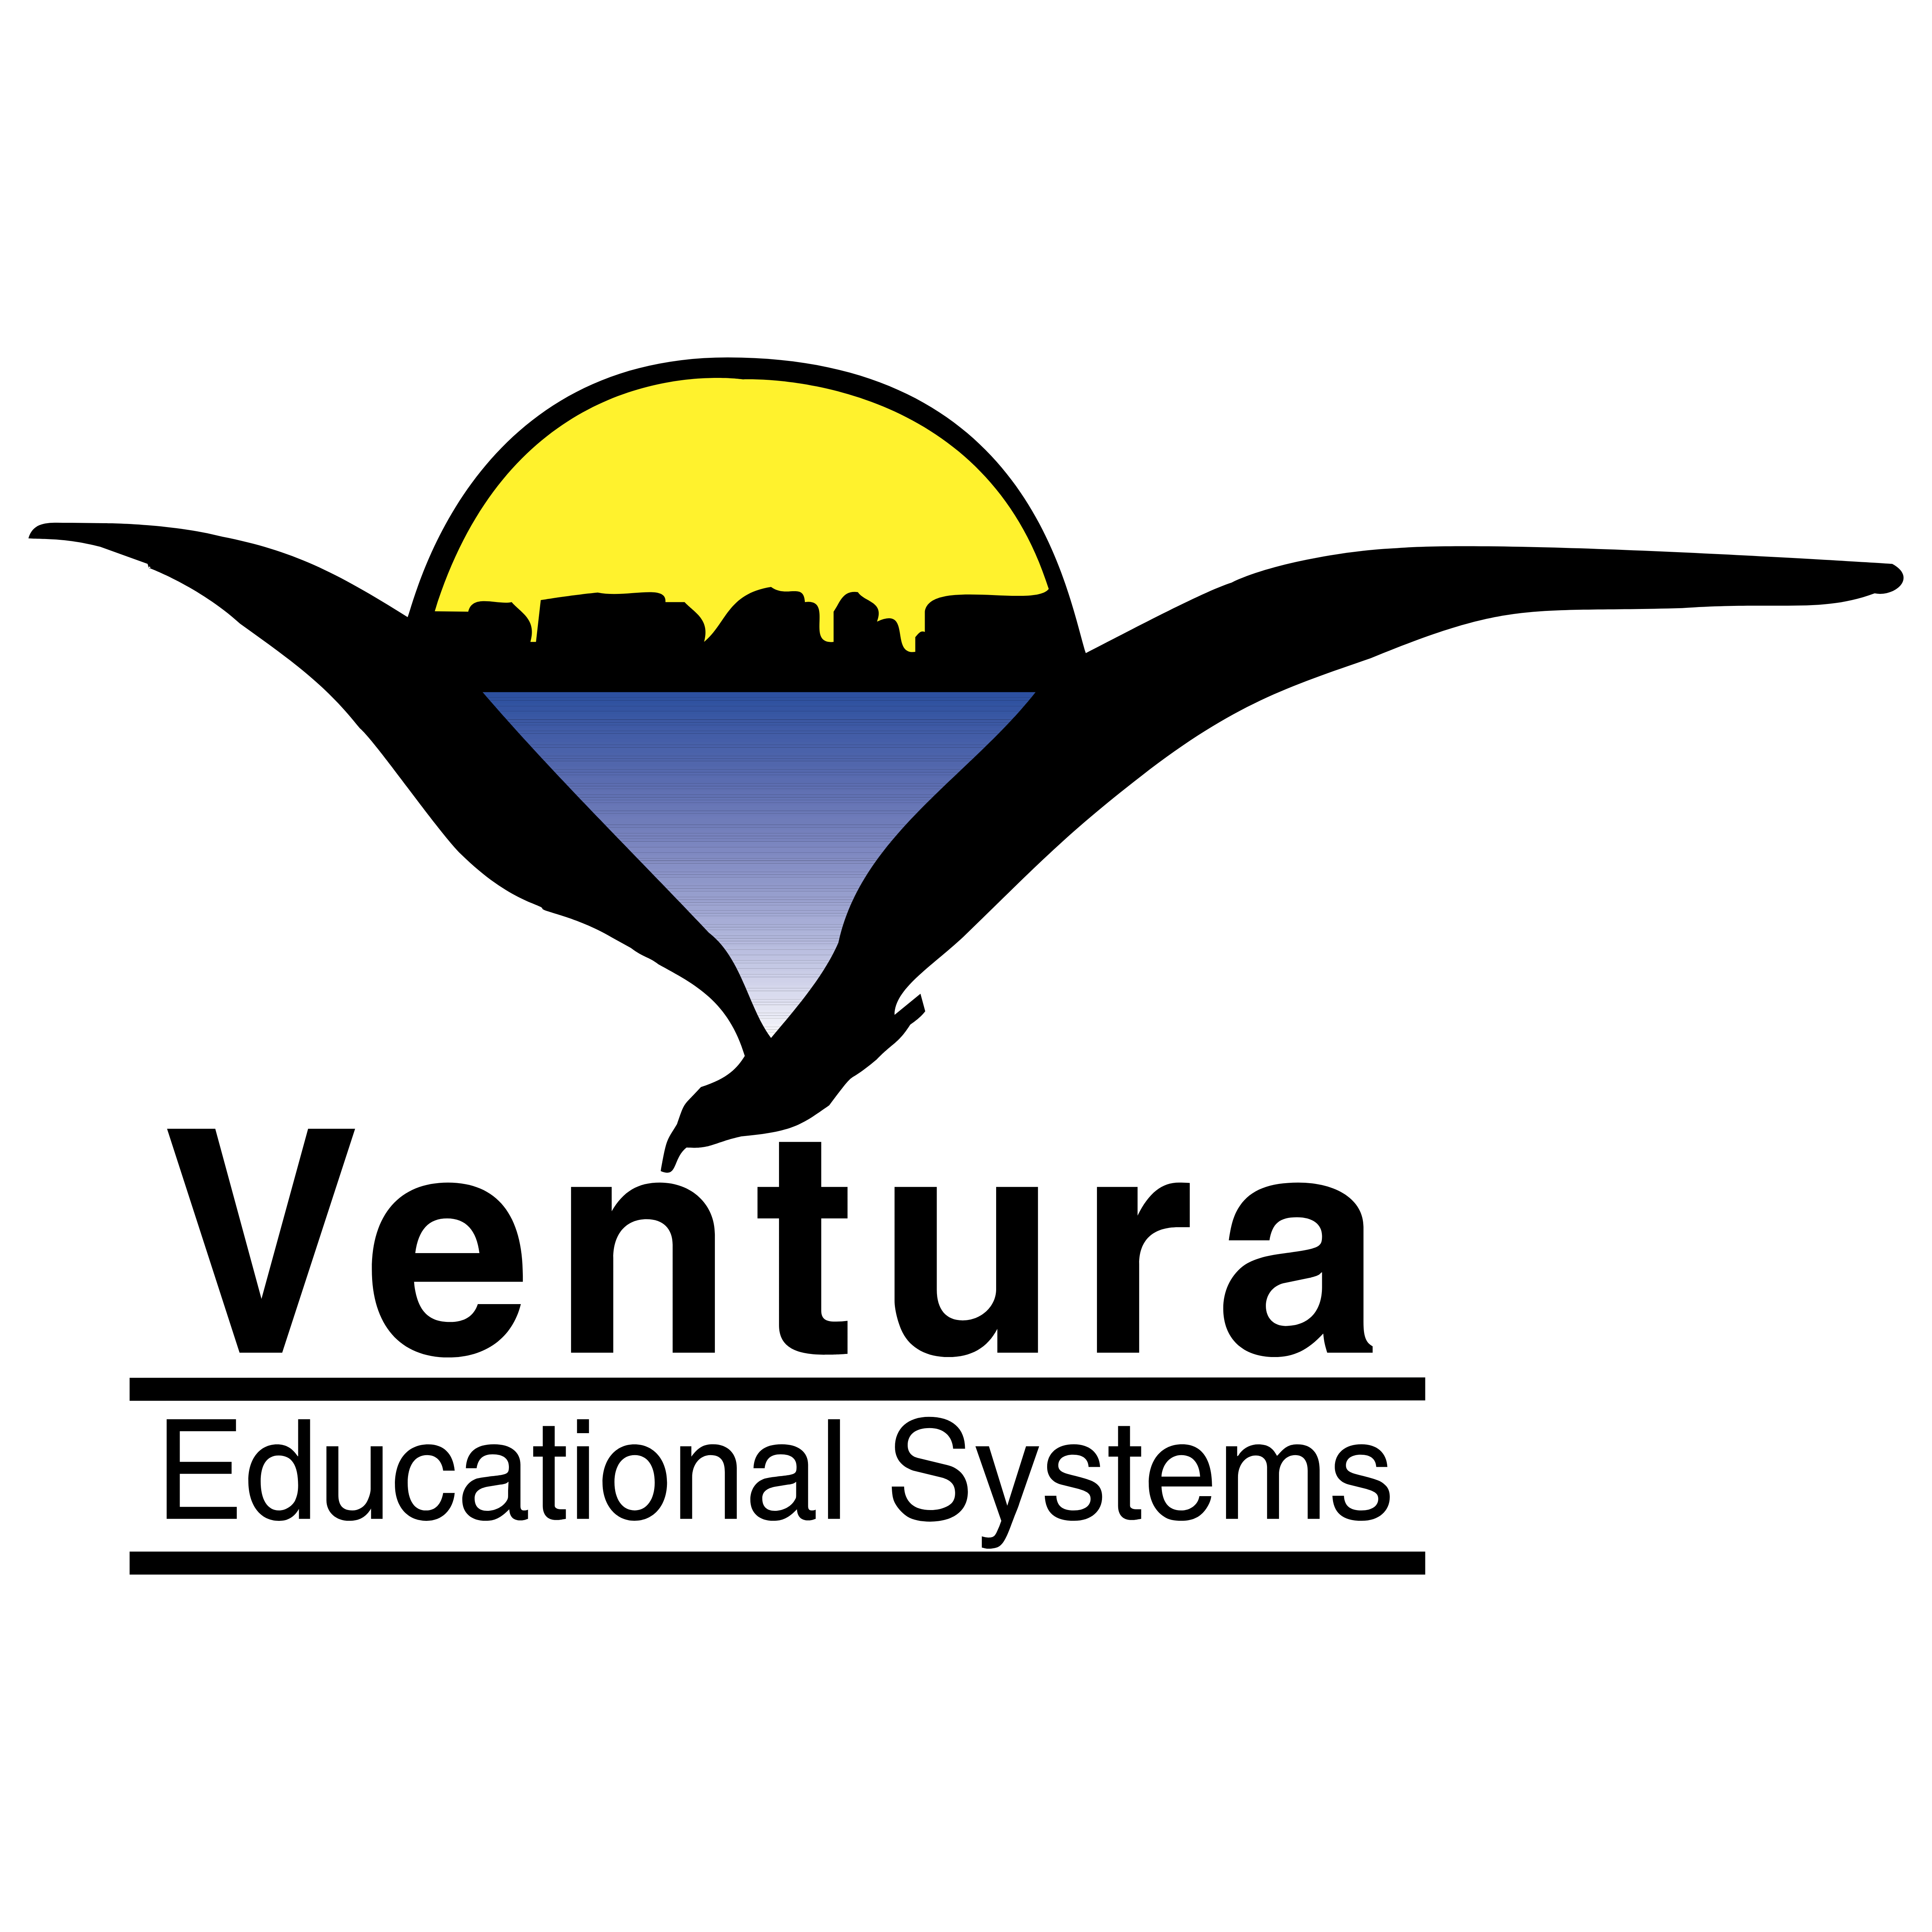 Ventura Logo - Ventura – Logos Download